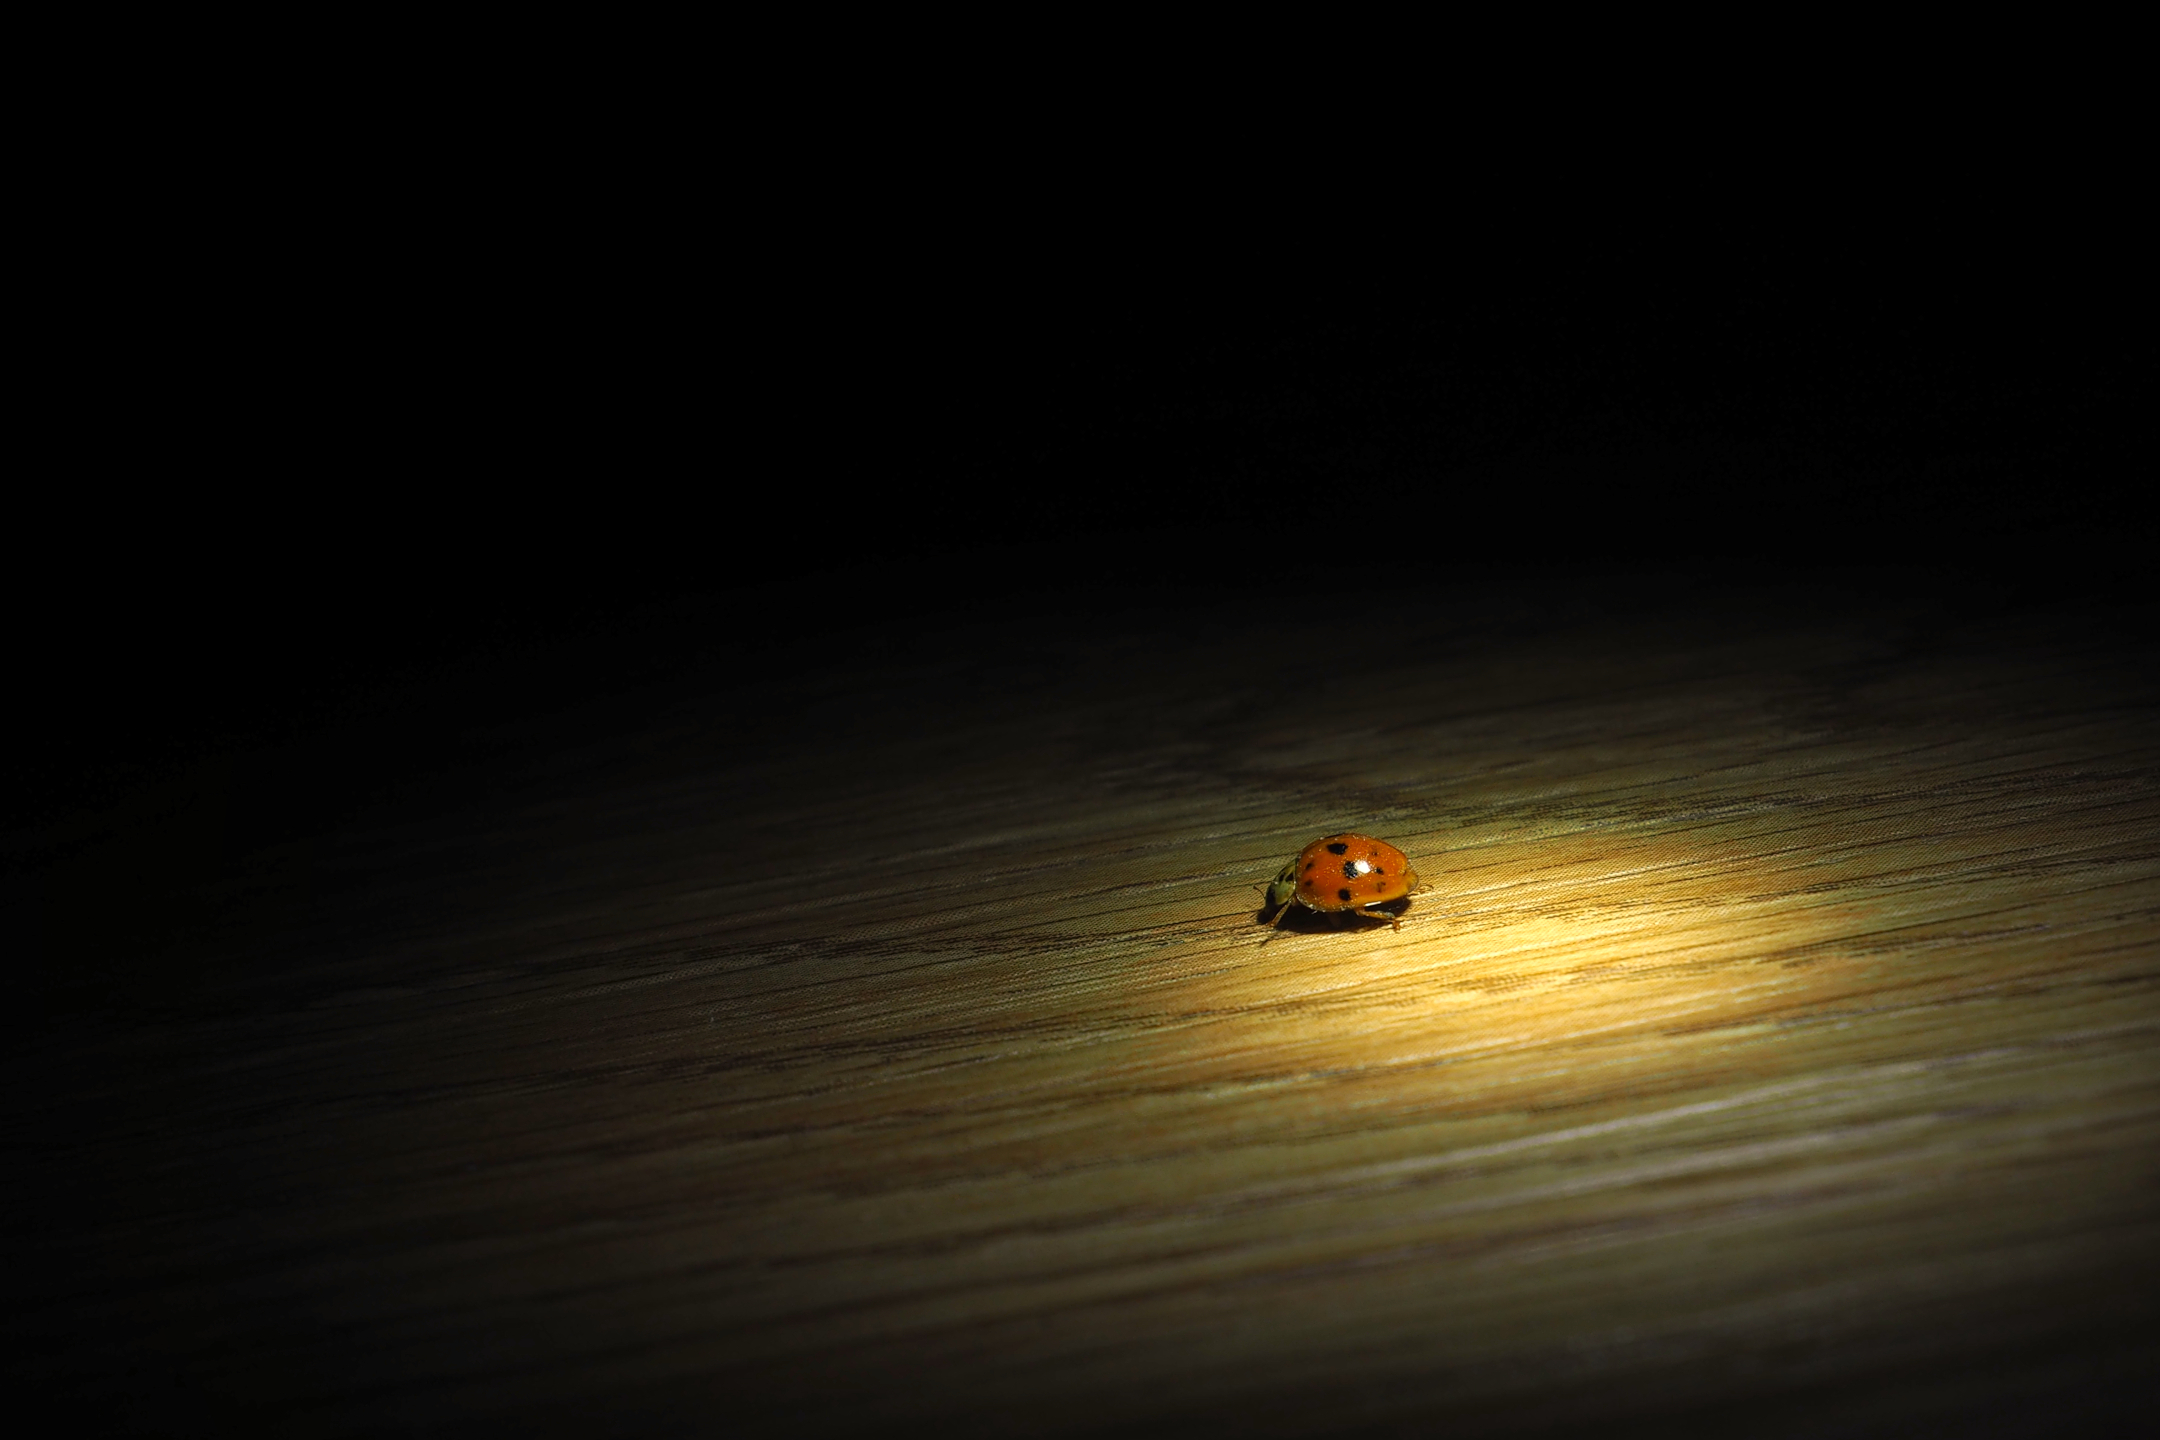 harlequin ladybug in the dark lit by a light beam